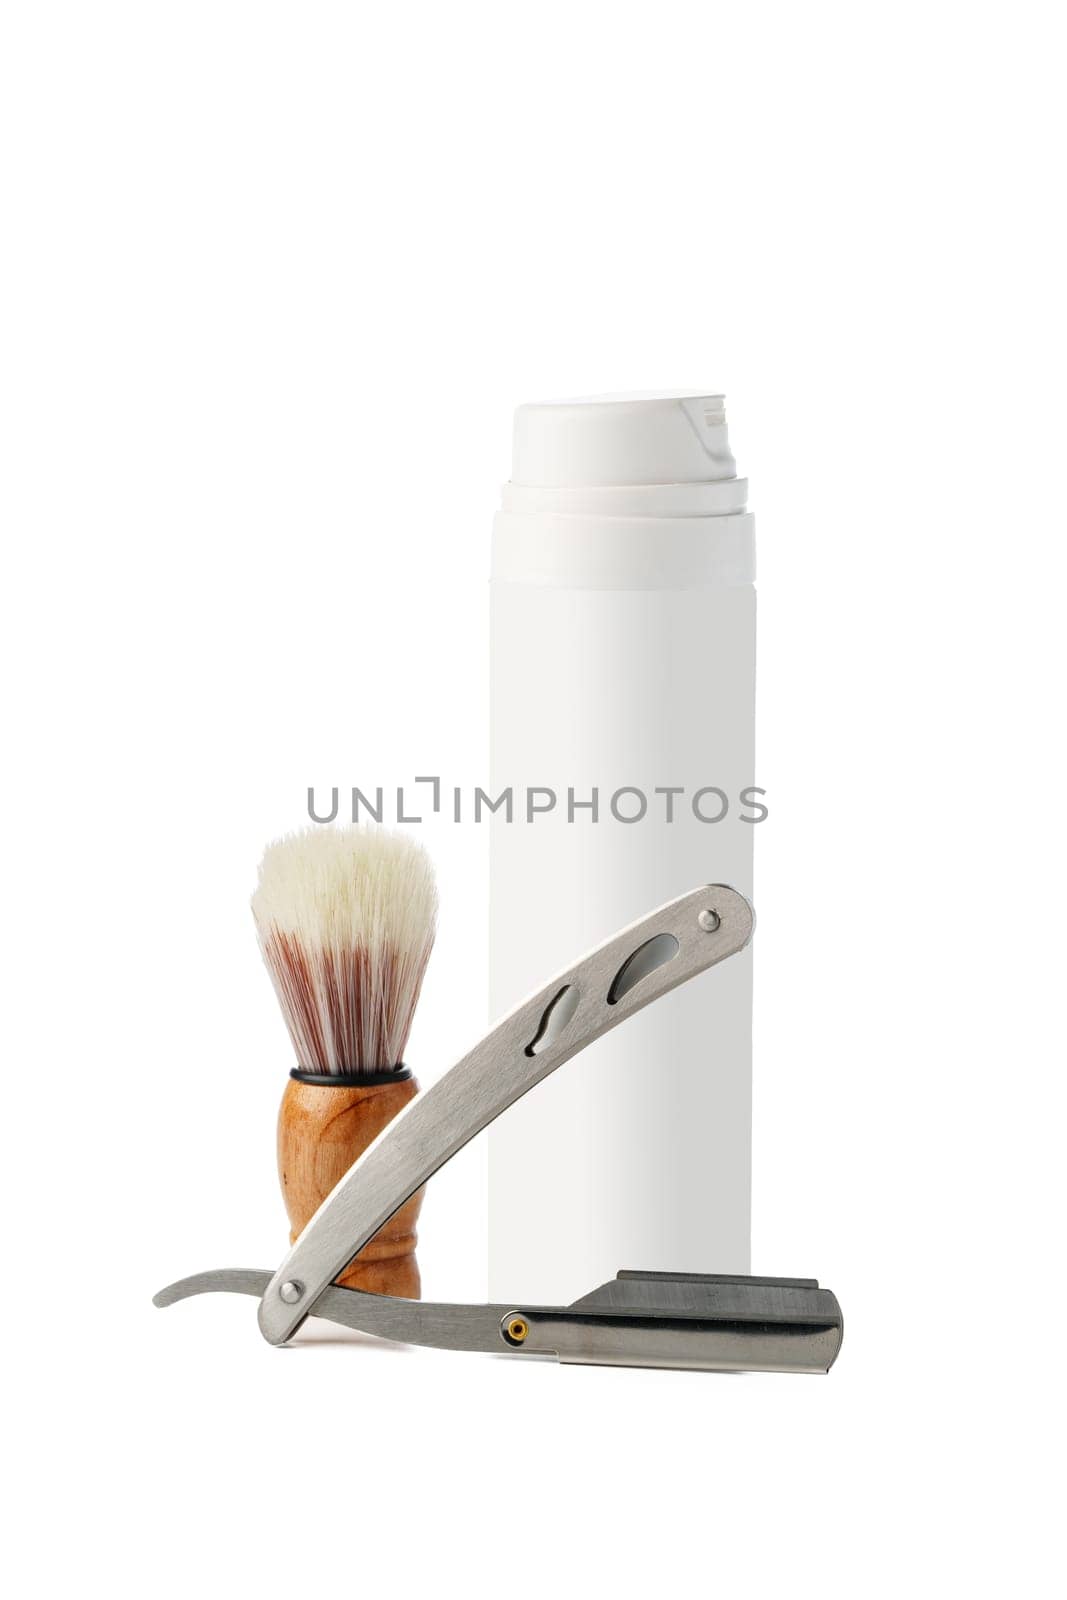 Vintage shaving razor and tools isolated on white by Fabrikasimf